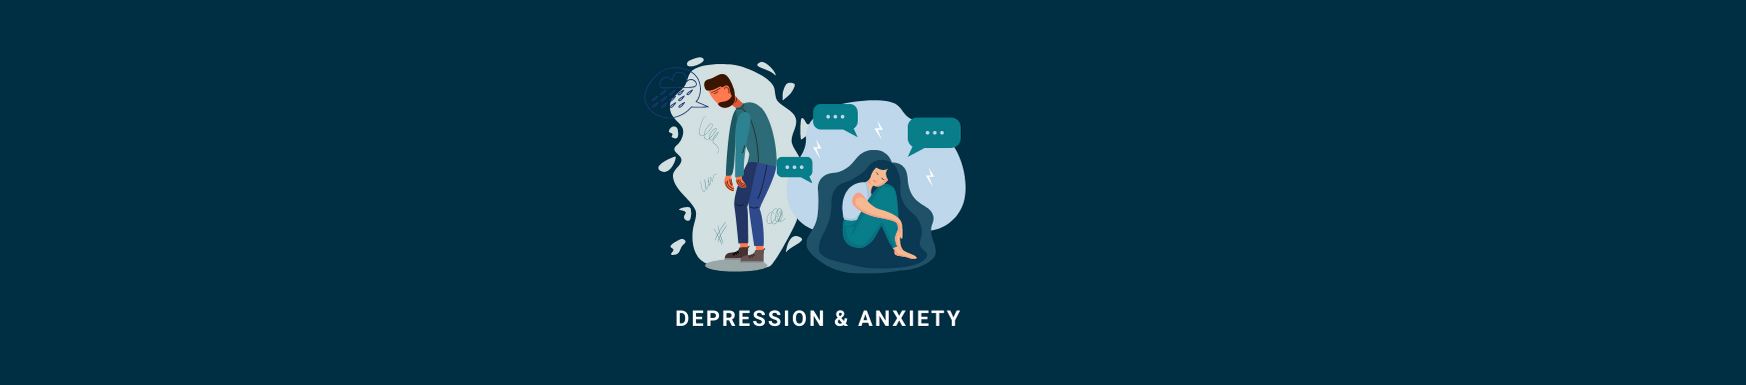 Depression & Anxiety - Kalpalatha Thiyagarajan Kalm Wellness Centre and Counselling Services